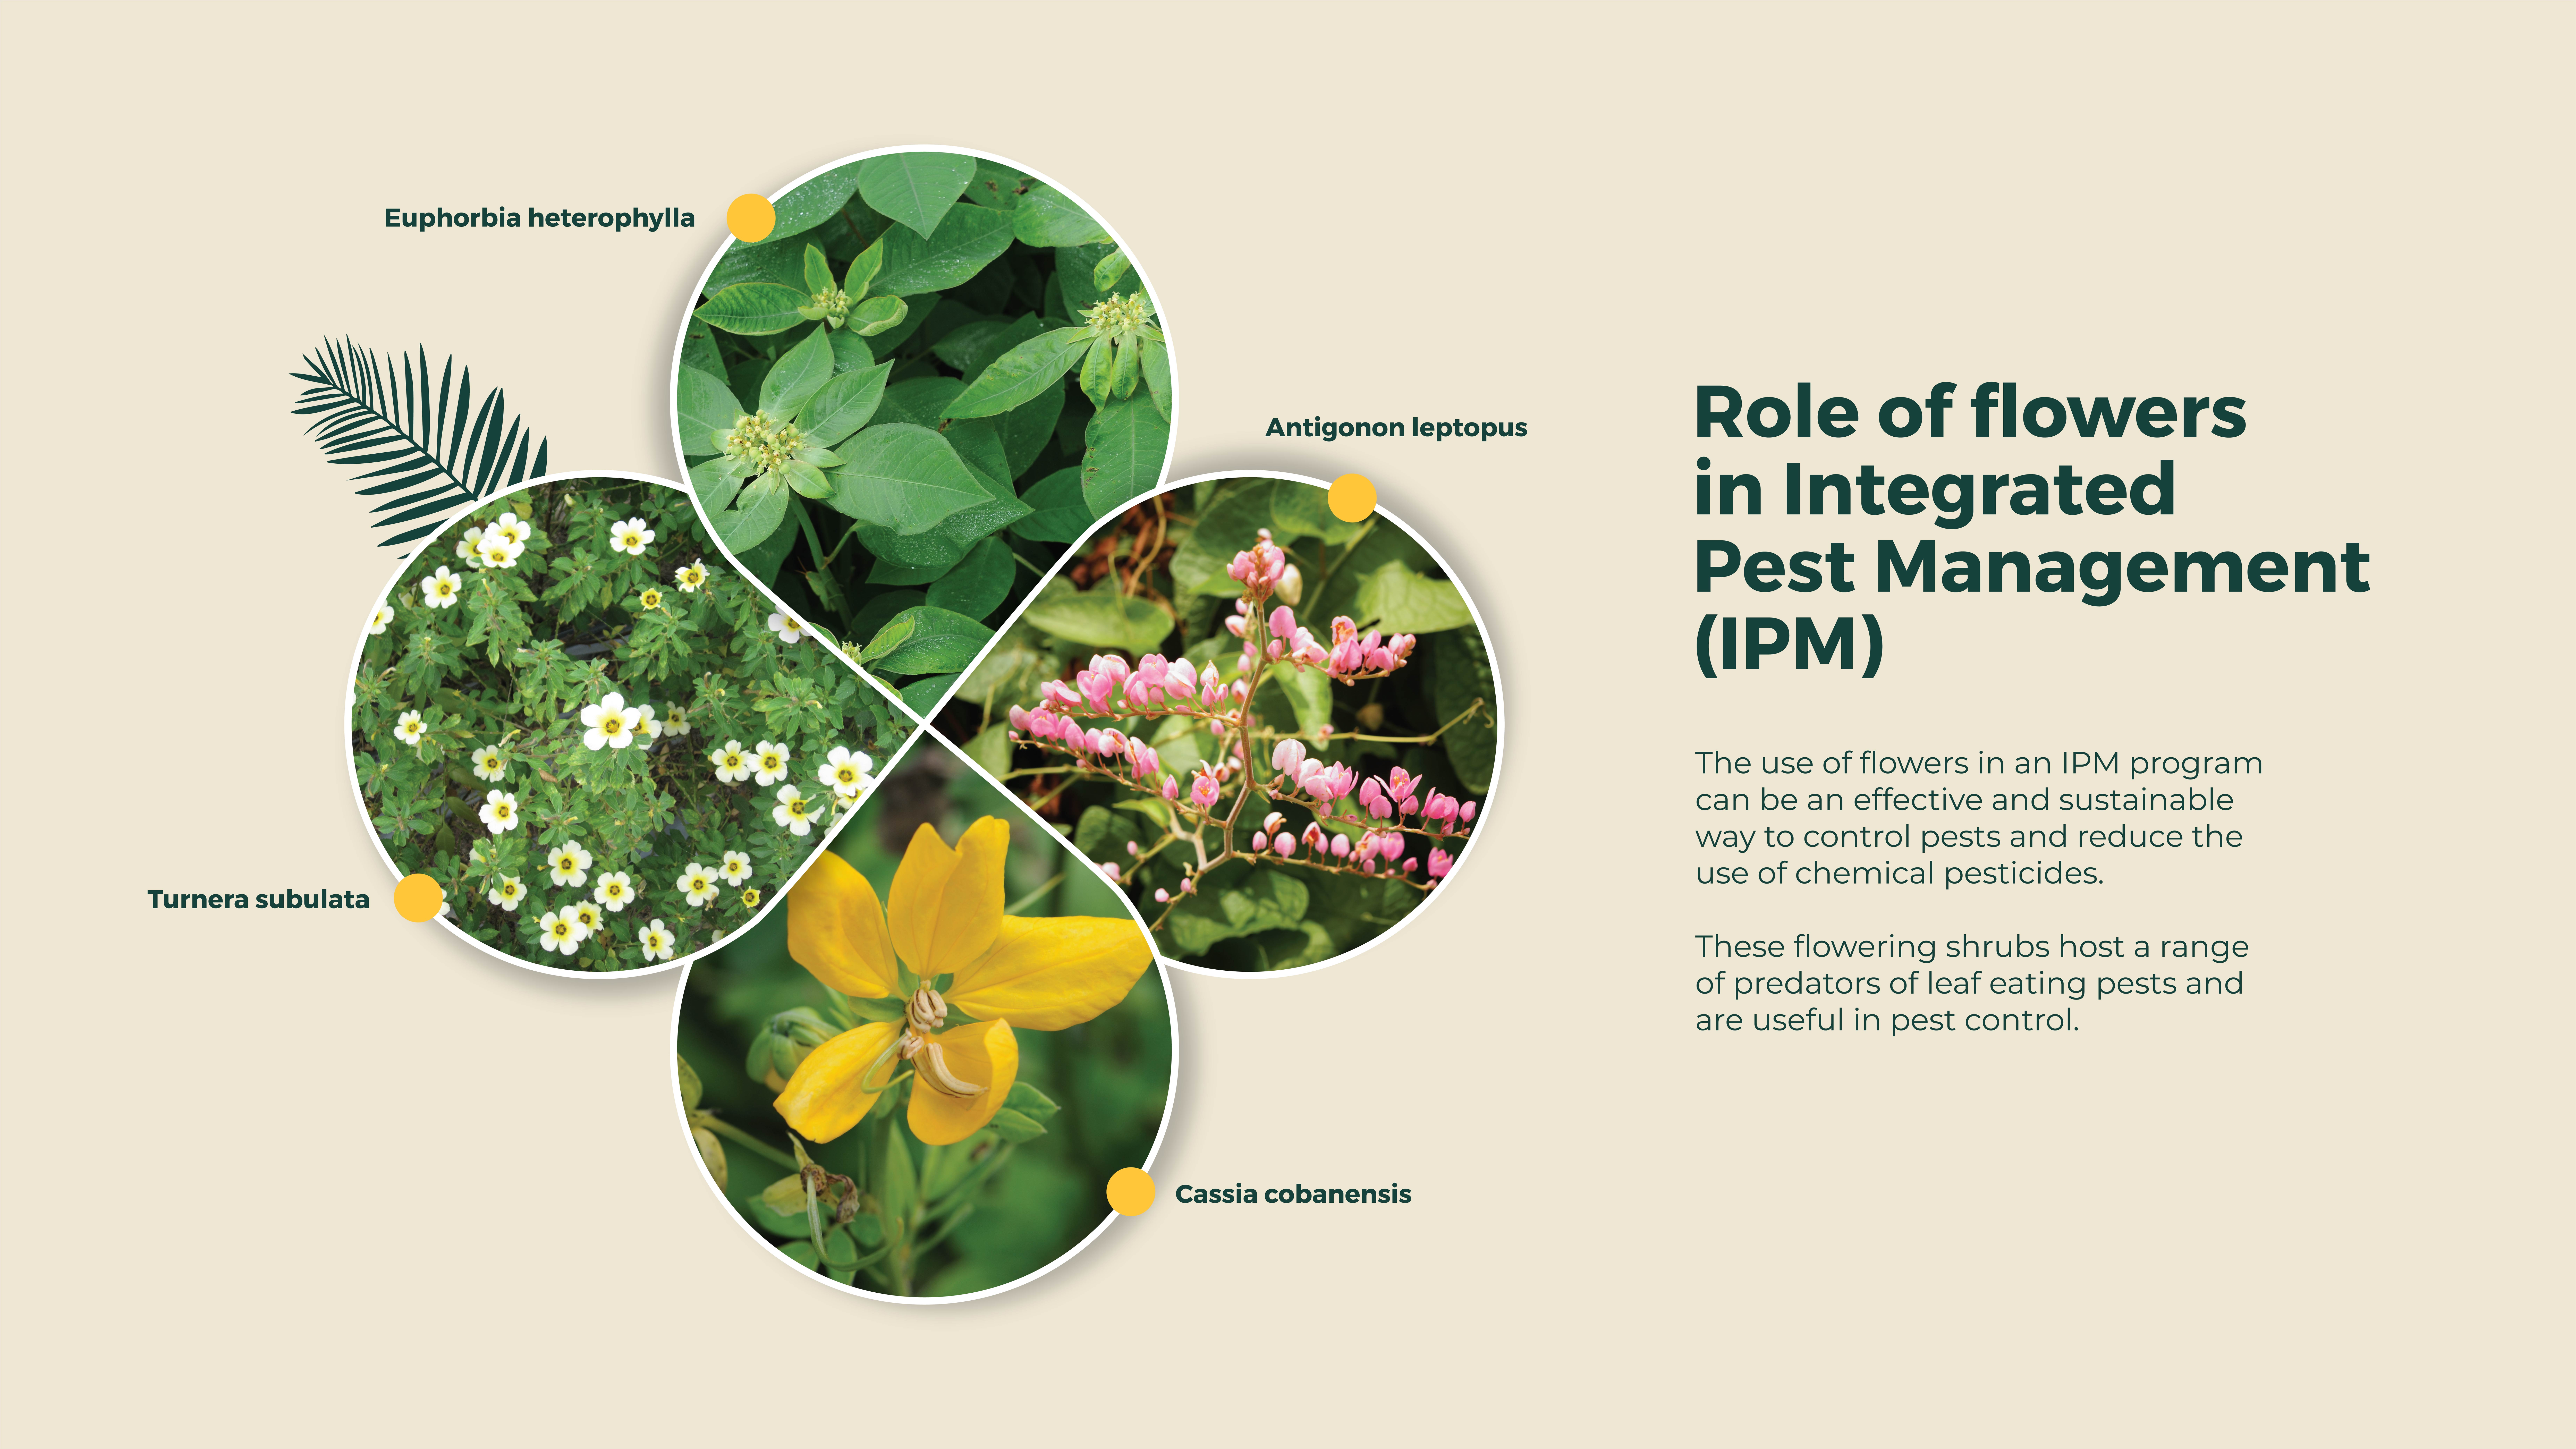 Role of beneficial plants and flowers - Cassia cobenensis, Tunera subulata, Euphorbia heterophylla, and Antigonon leptopus - Integrated Pest Management 